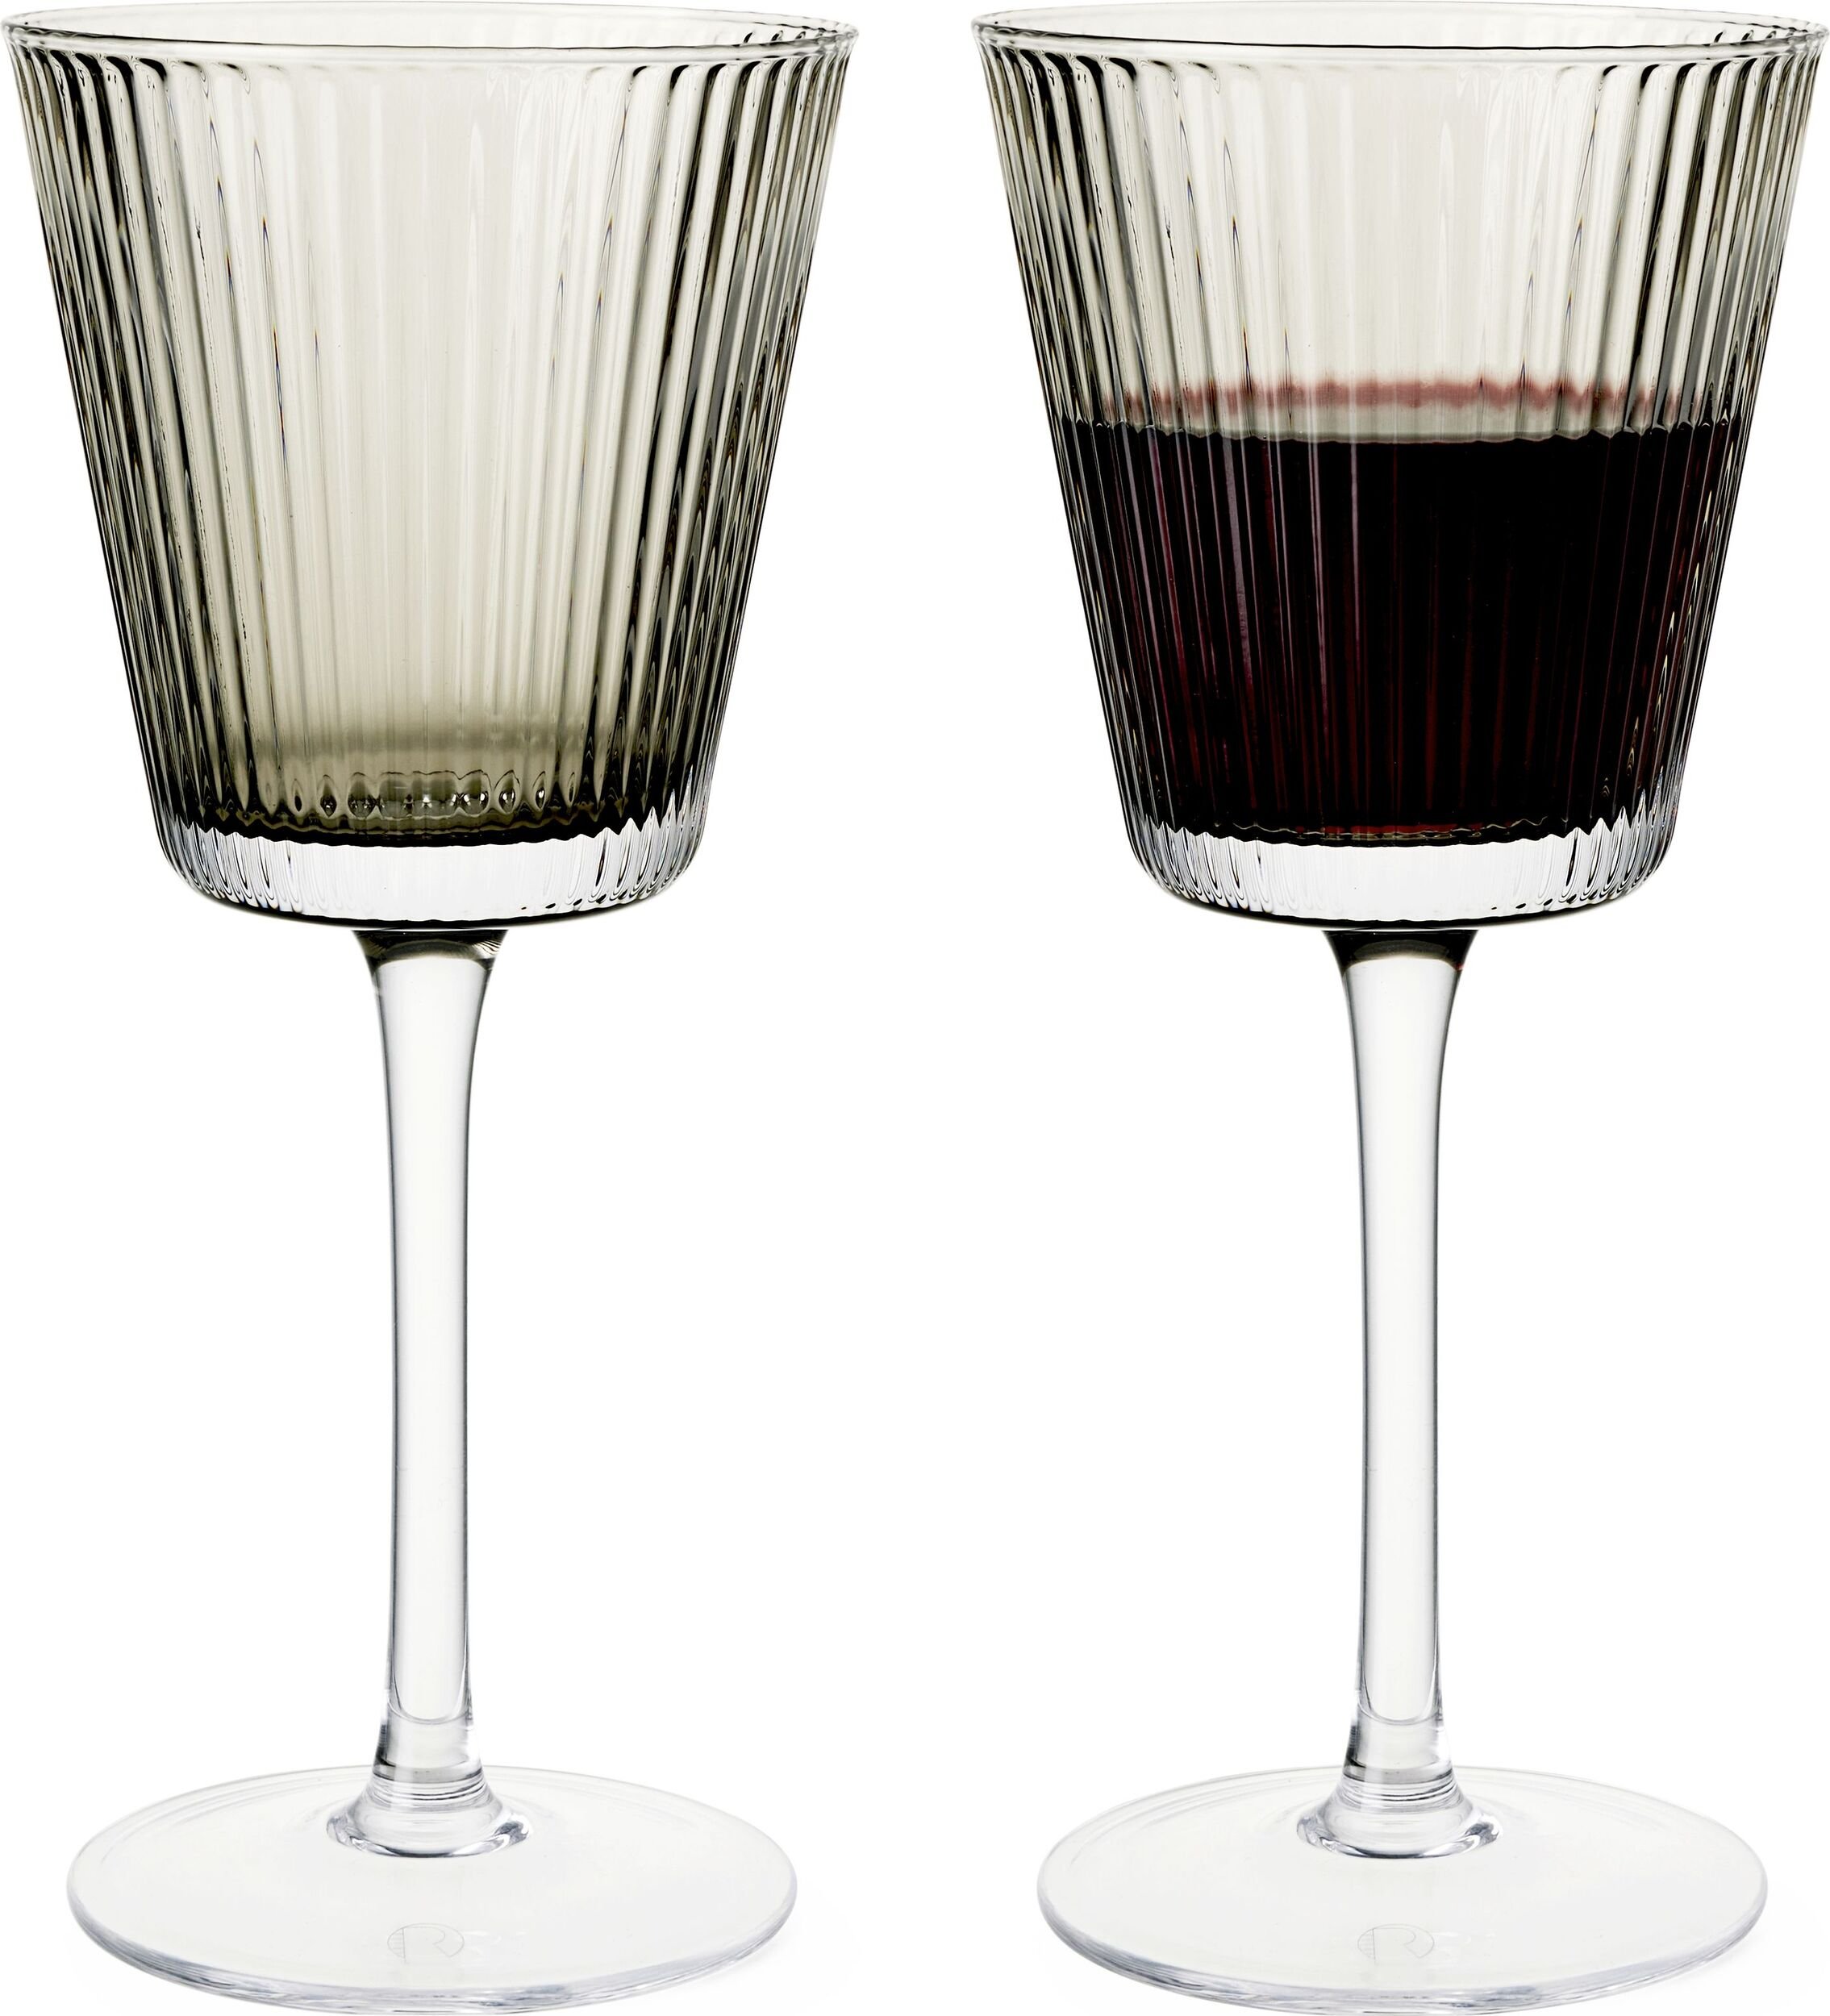 https://3fa-media.com/rosendahl/rosendahl-grand-cru-nouveau-wine-glasses-180-ml-smoked-2-pcs__153603_0474779-s2500x2500.jpg